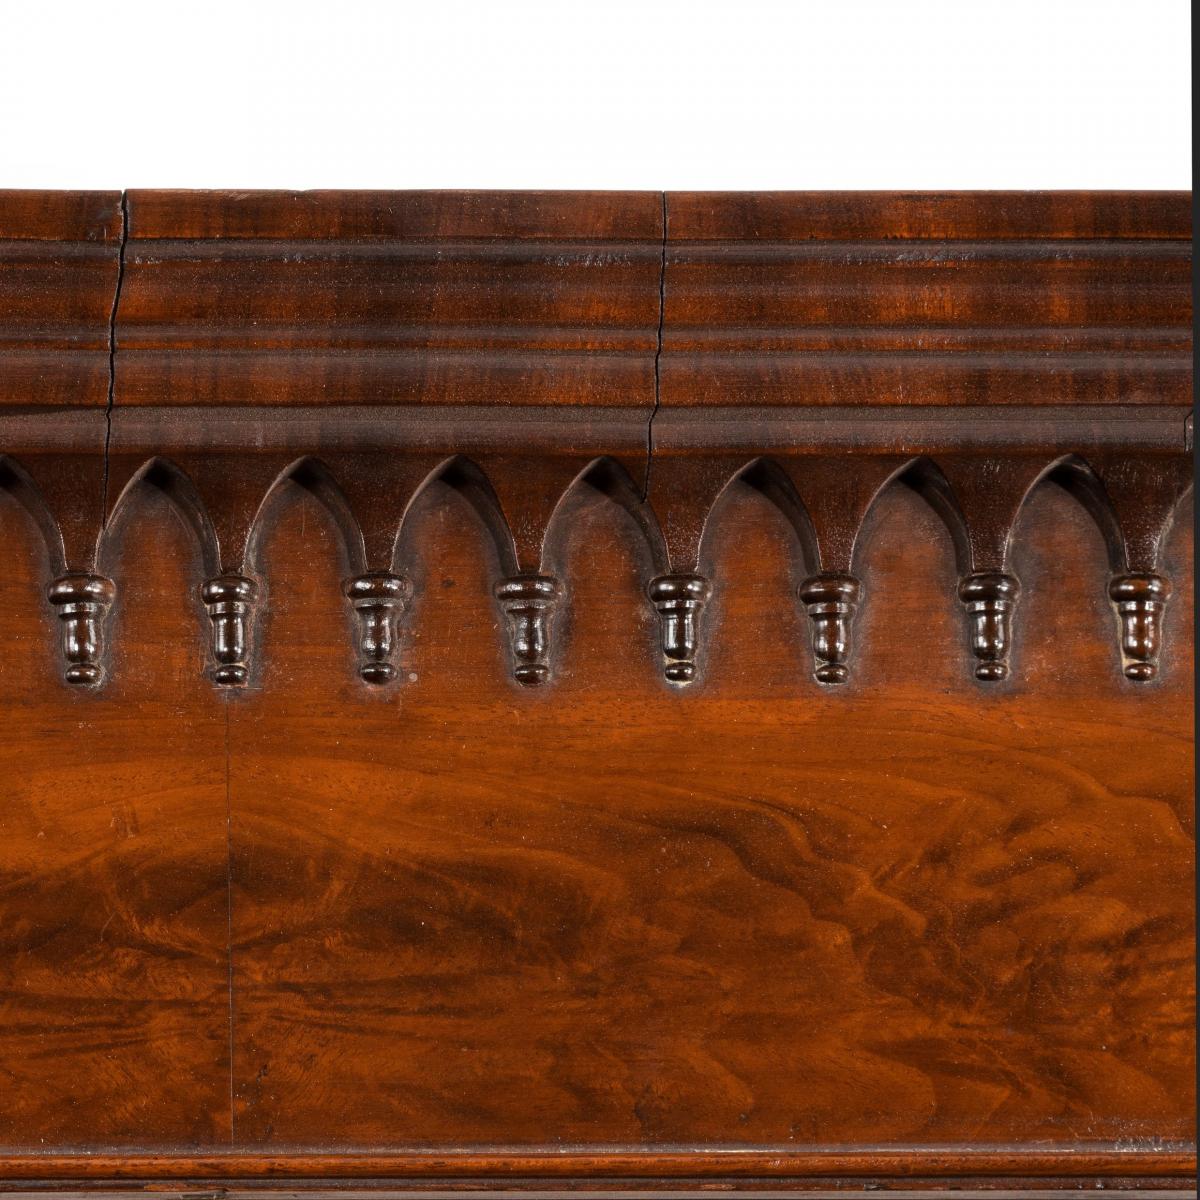 Tall George III mahogany bookcase